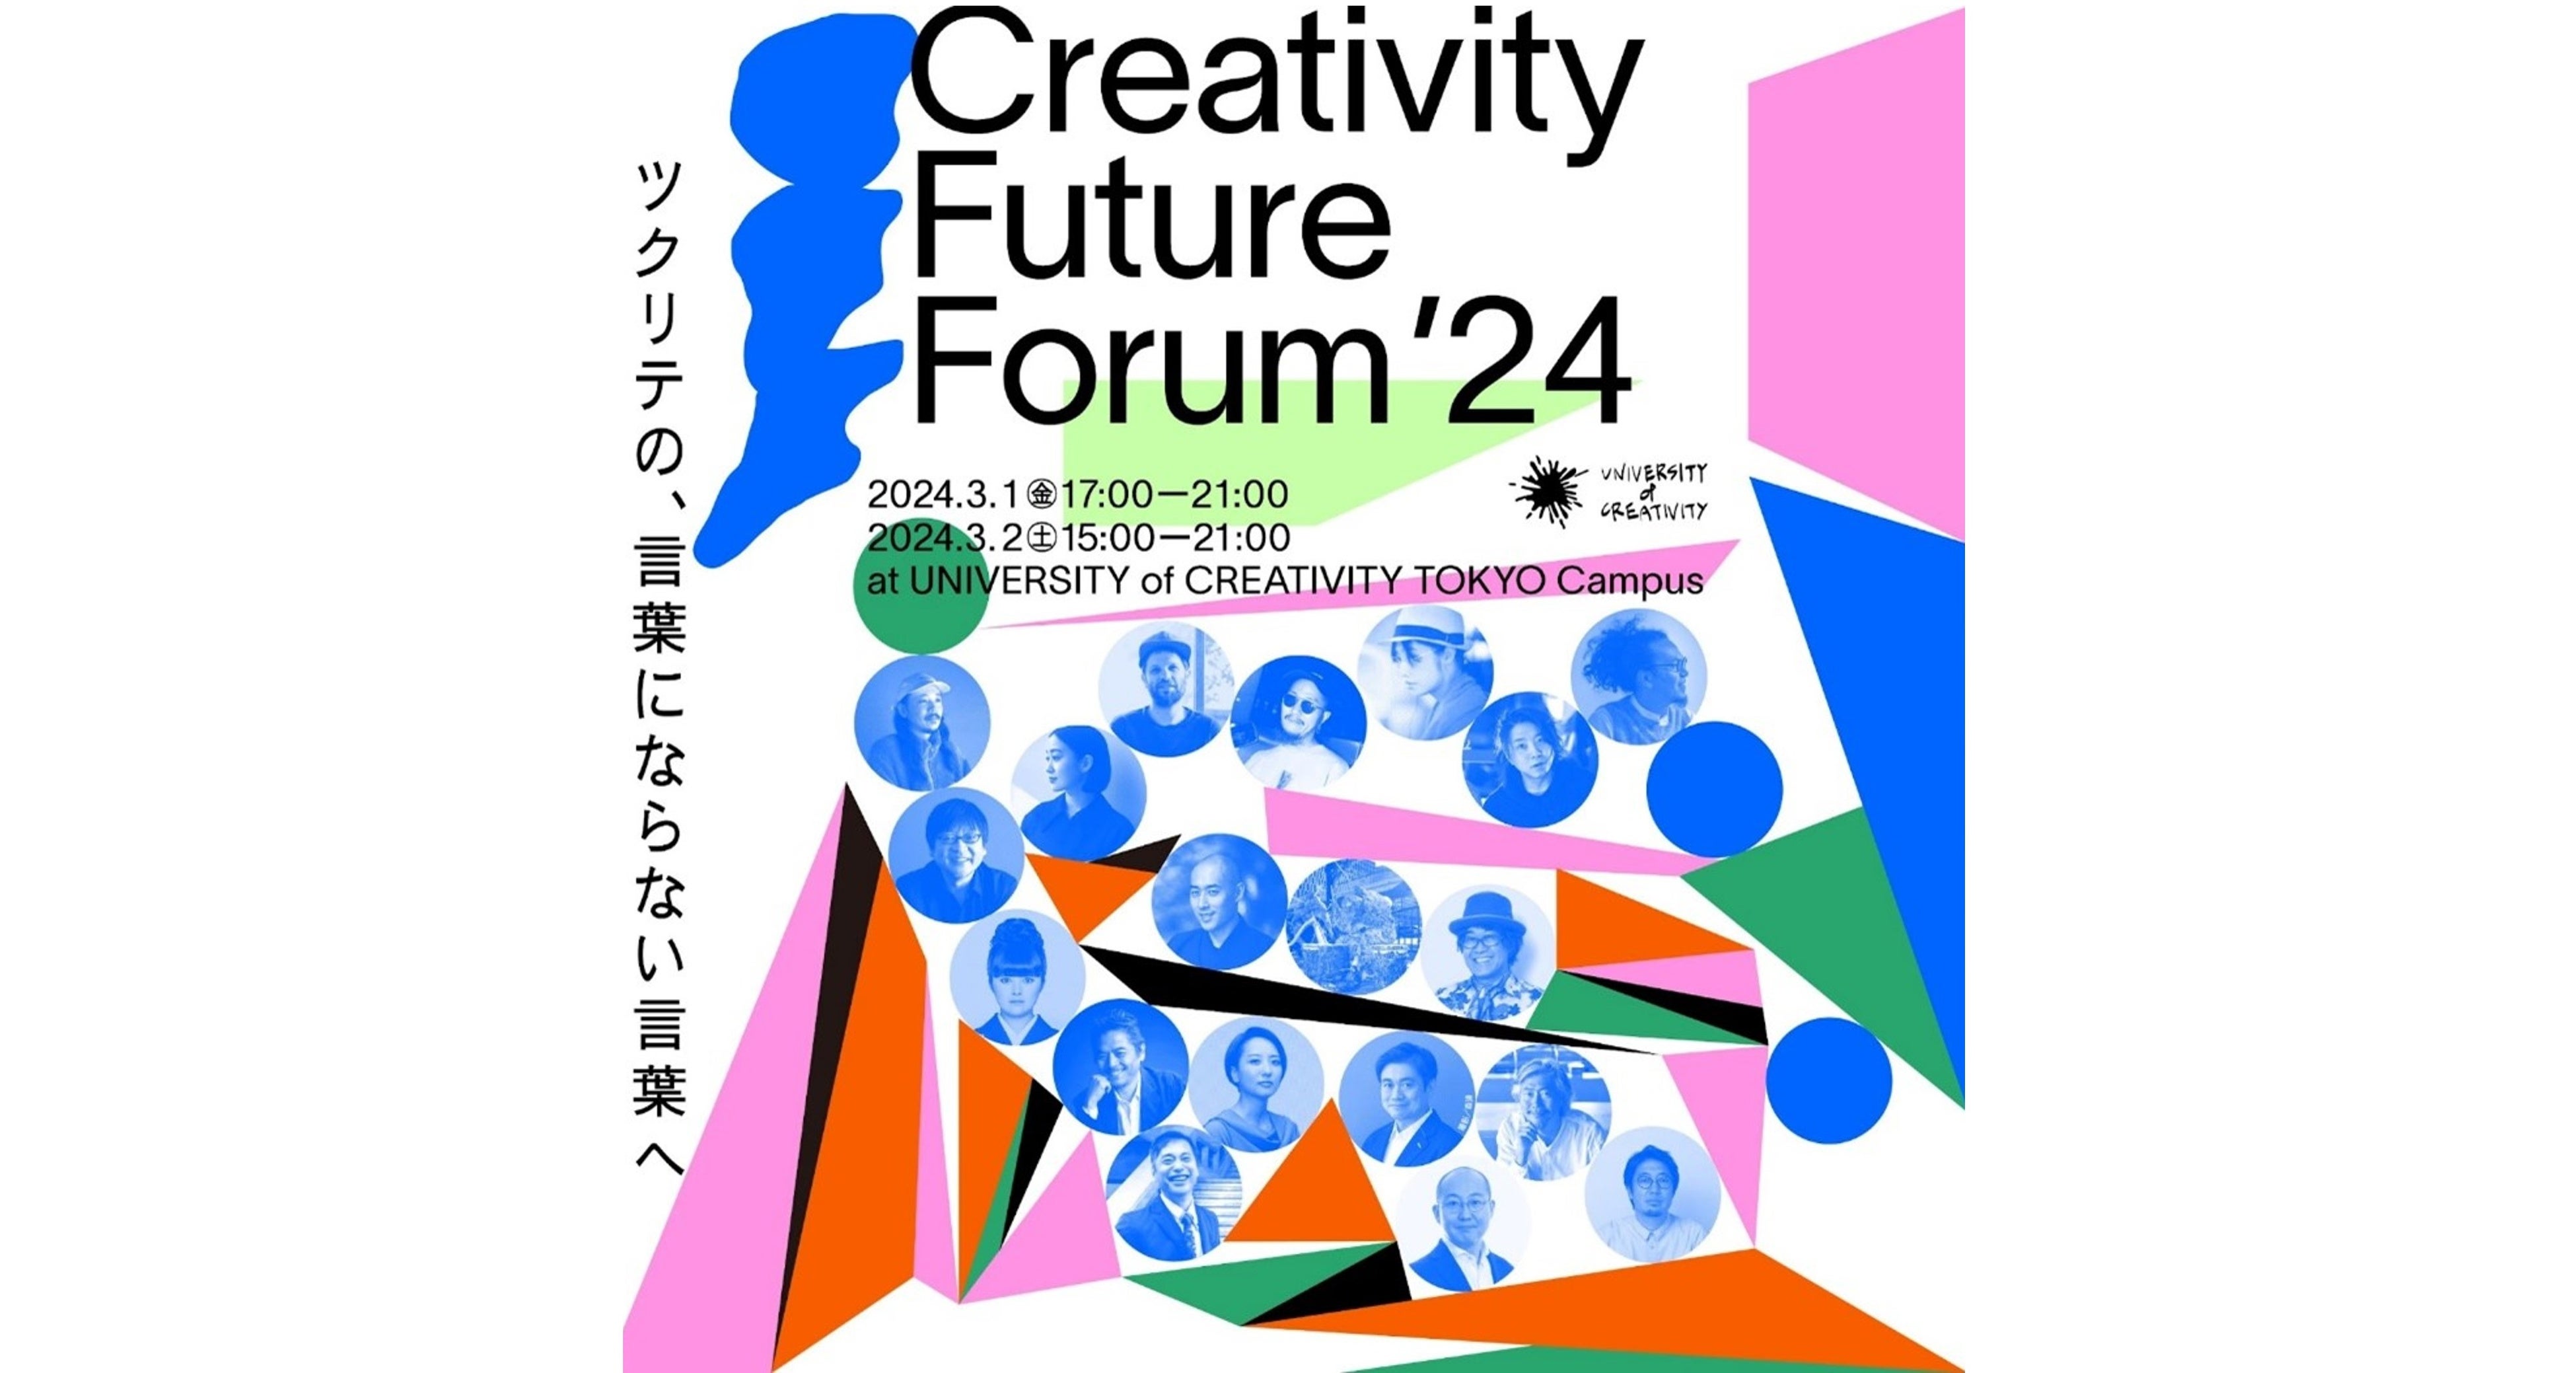 UNIVERSITY of CREATIVITYACreativity Future Forum f24ucNéAtɂȂȂtցv31ijE2iyjJ